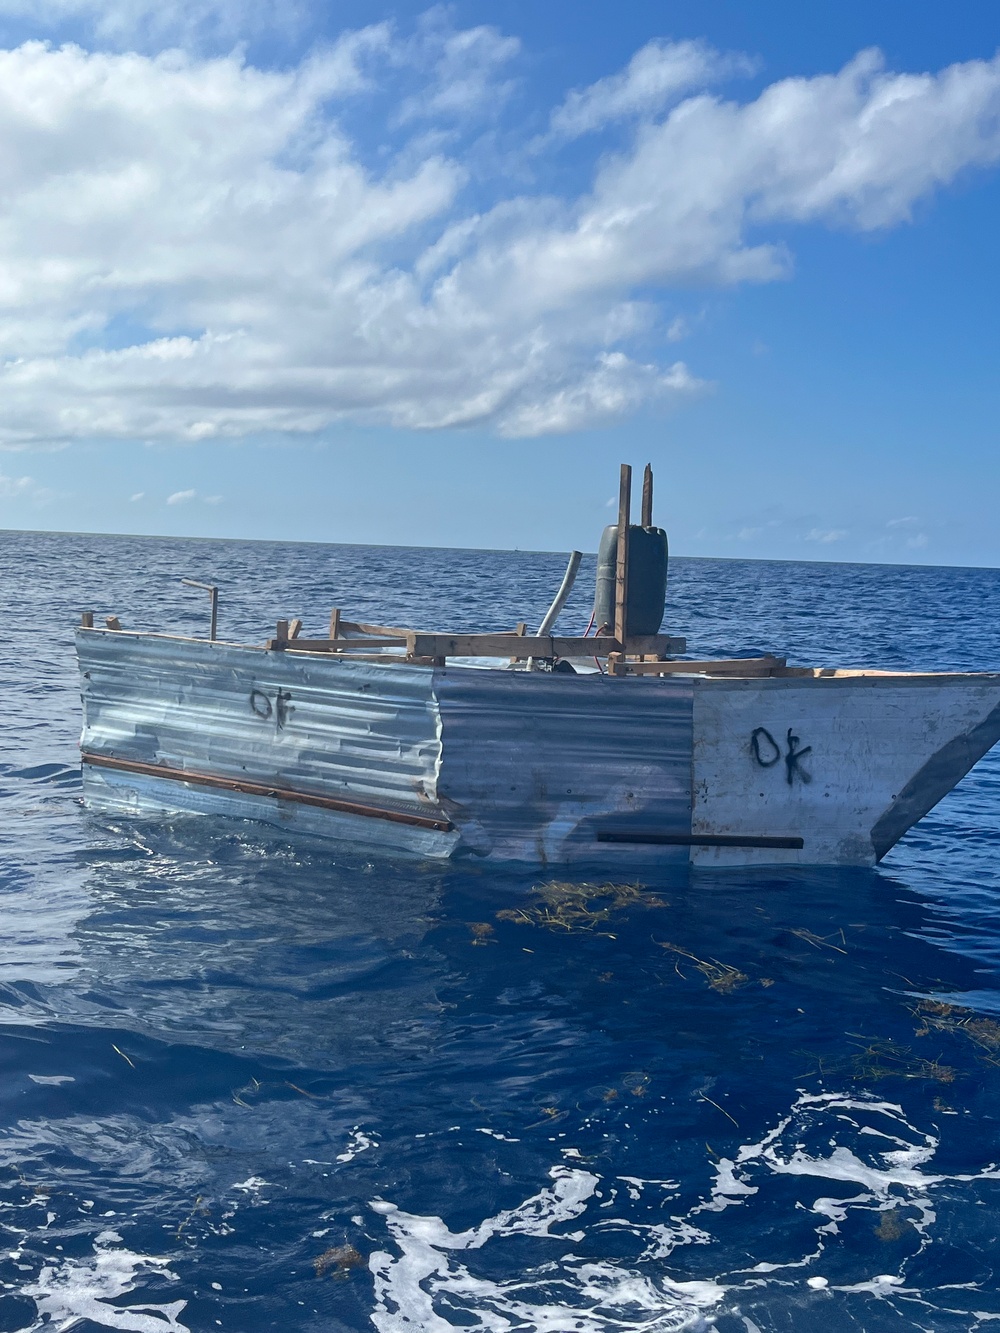 Coast Guard repatriates 91 people to Cuba